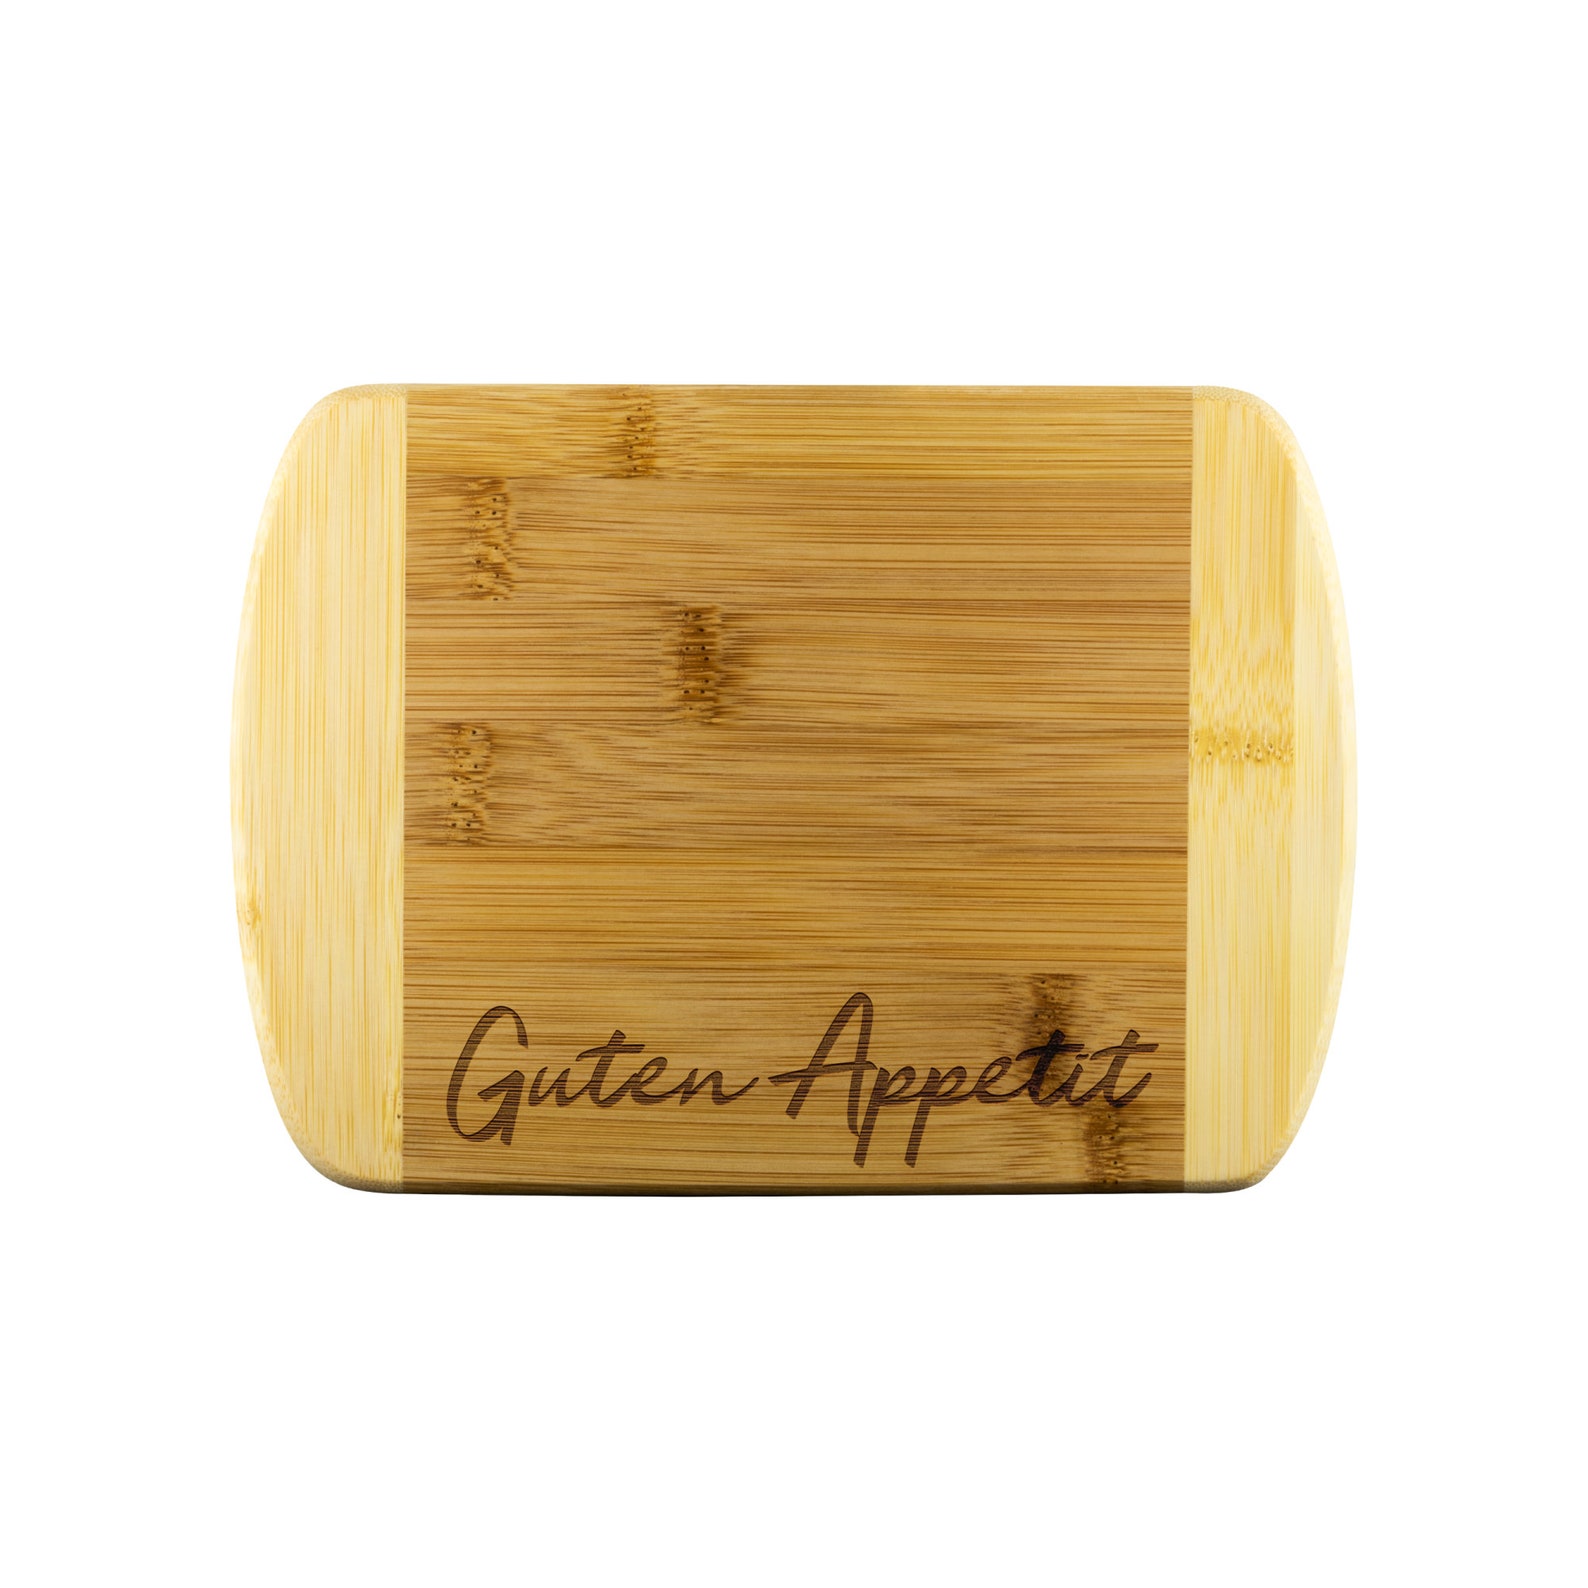 Guten Appetit Round Edge Bamboo Cutting Board, German Housewarming gift